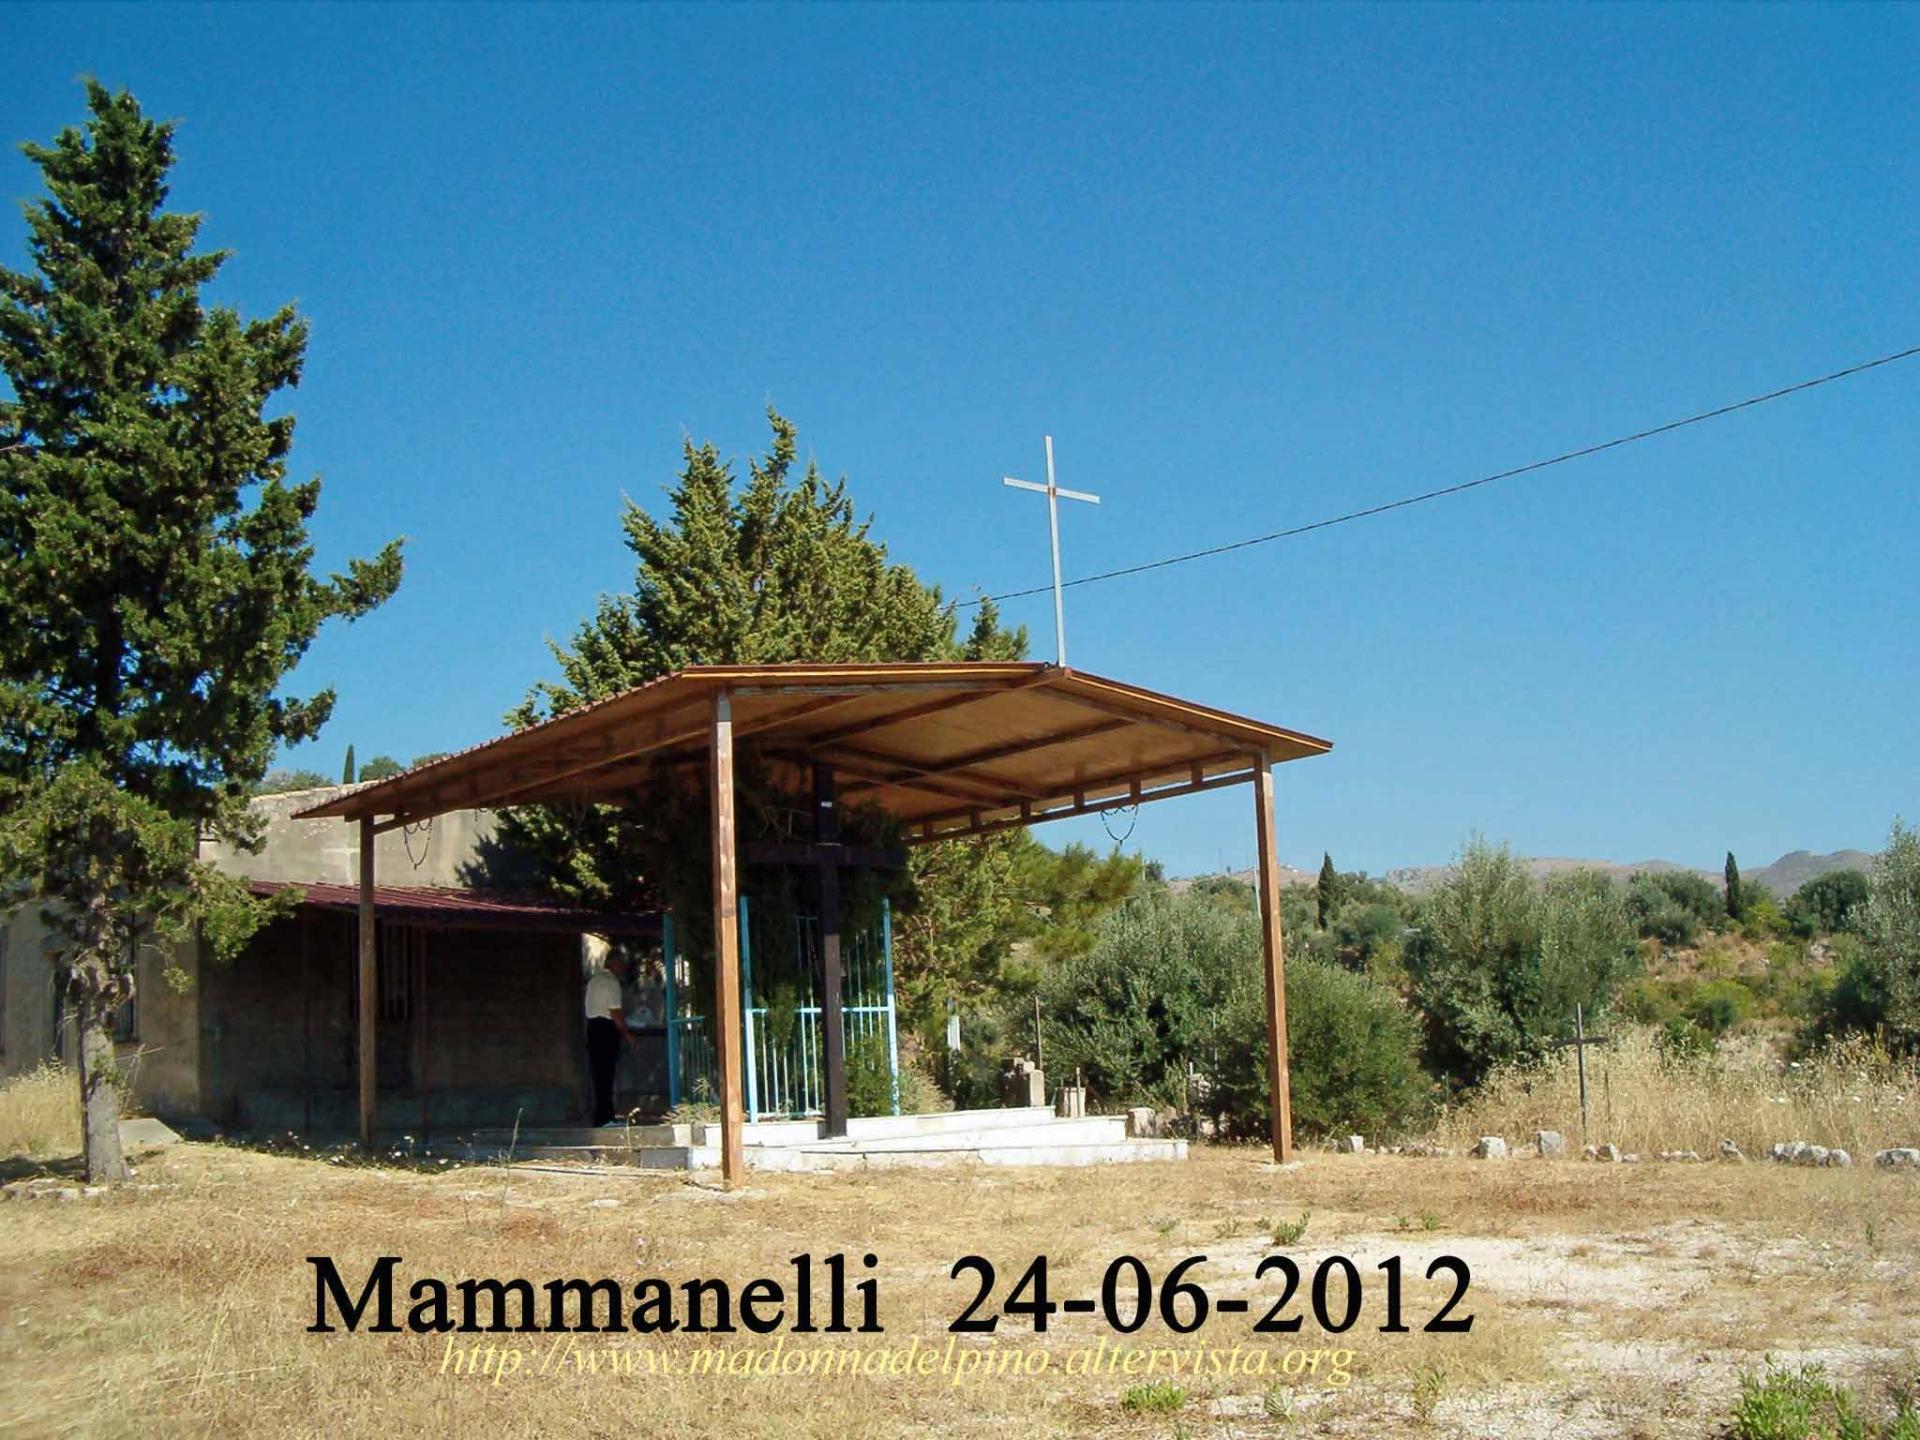 Mammanelli